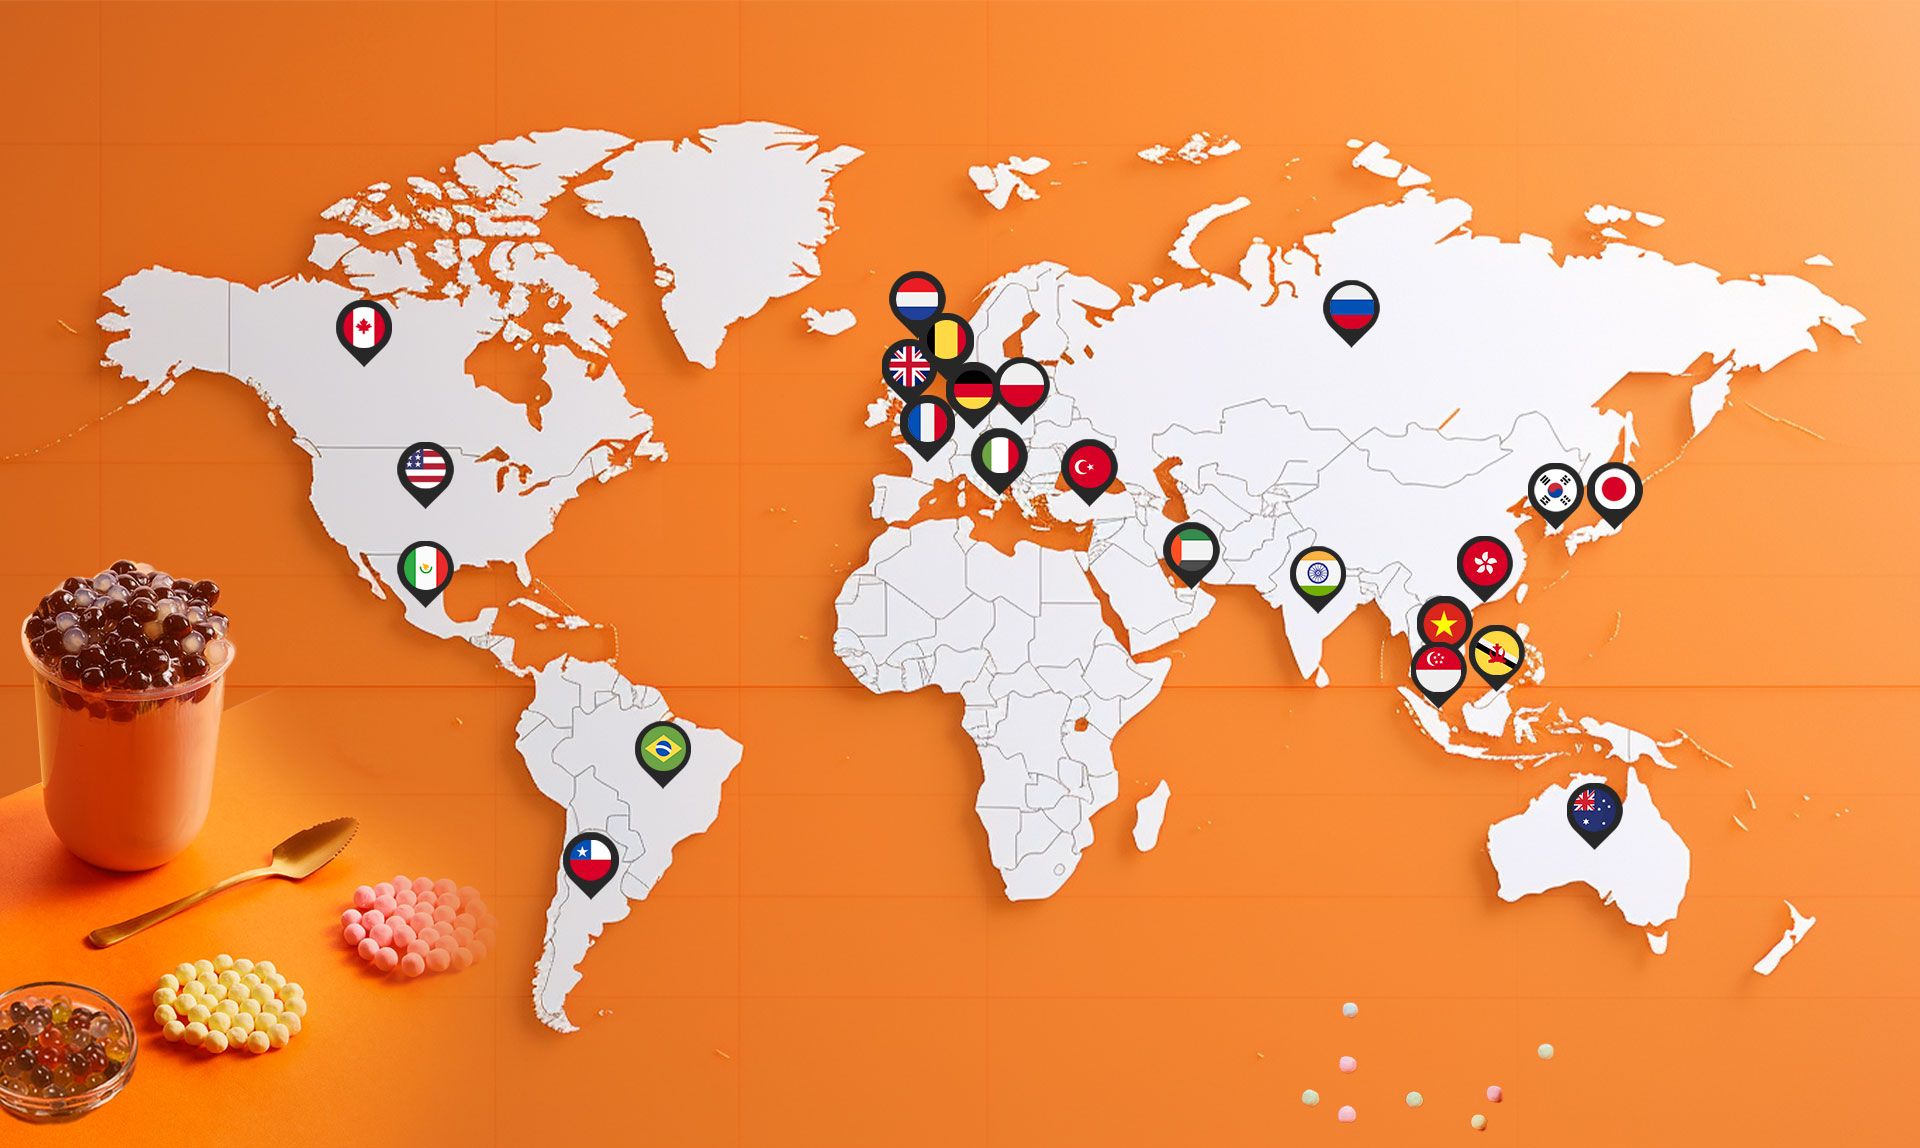 Bubblephil積極跨足海外，將珍珠奶茶迎向全球。目前已在北美洲、東南亞、亞洲已有合作夥伴，正在往歐洲擴展。